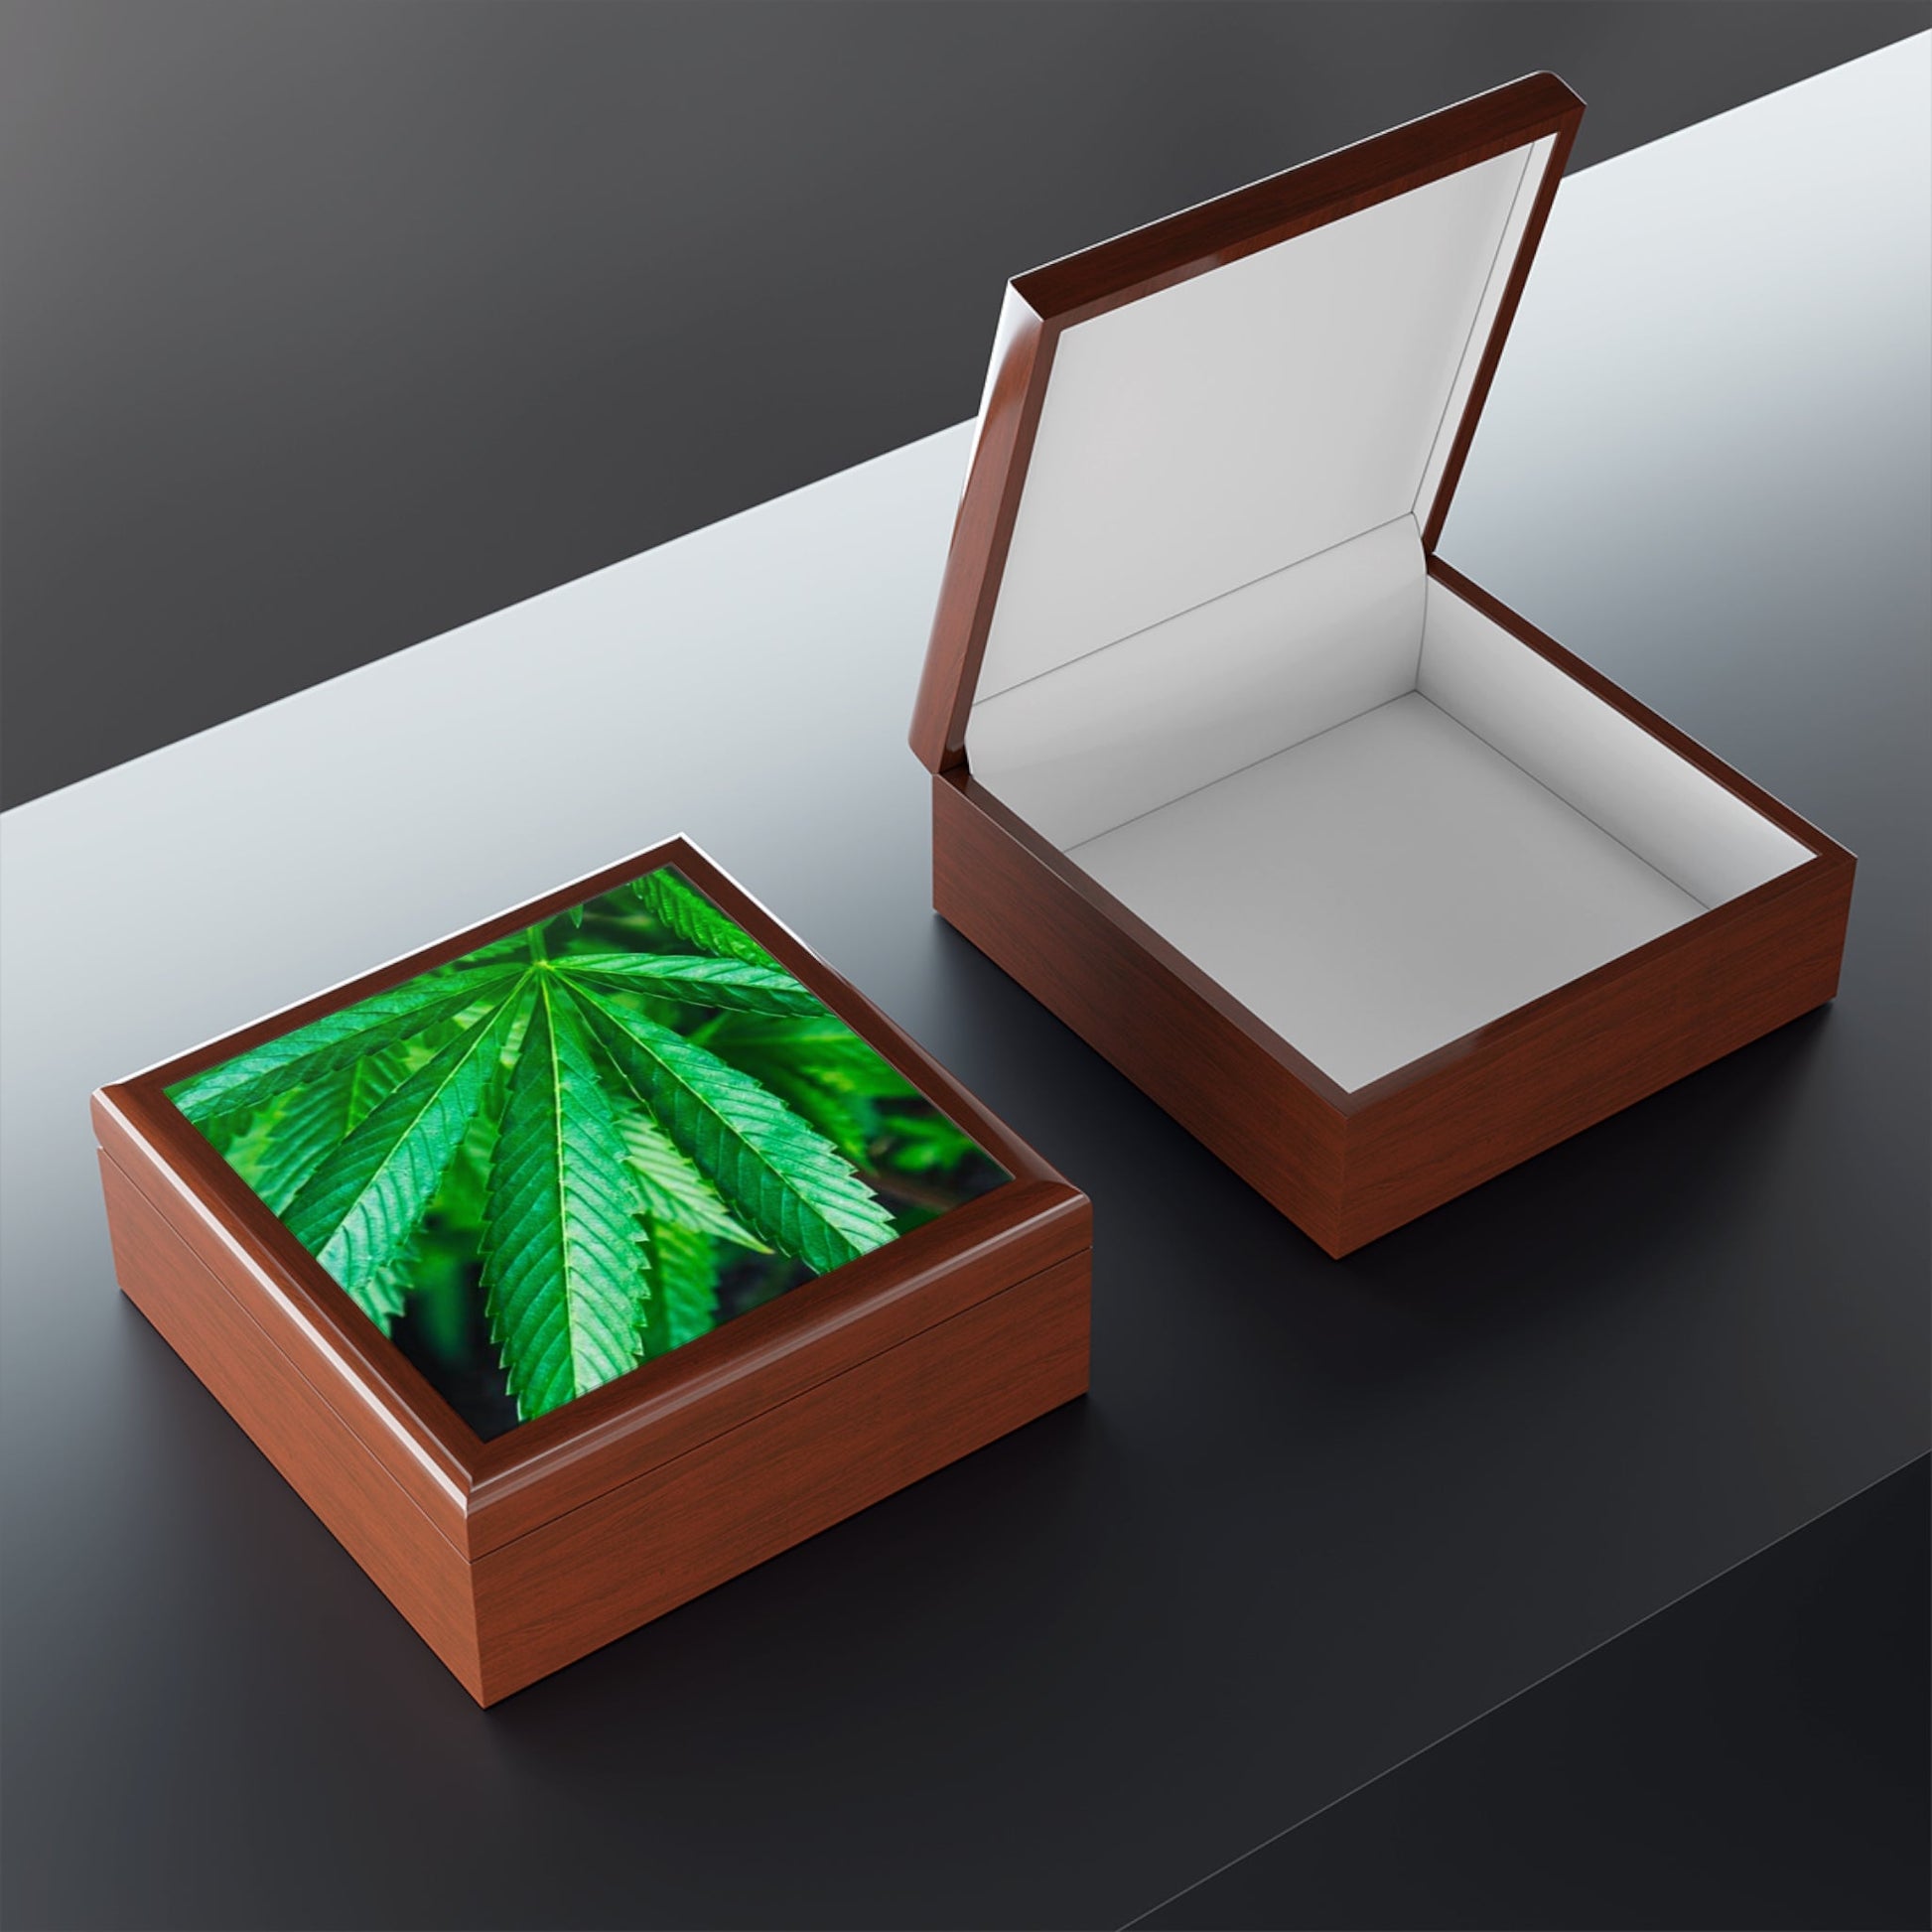 Cannibis Marijuana Stash and Jewelry Box